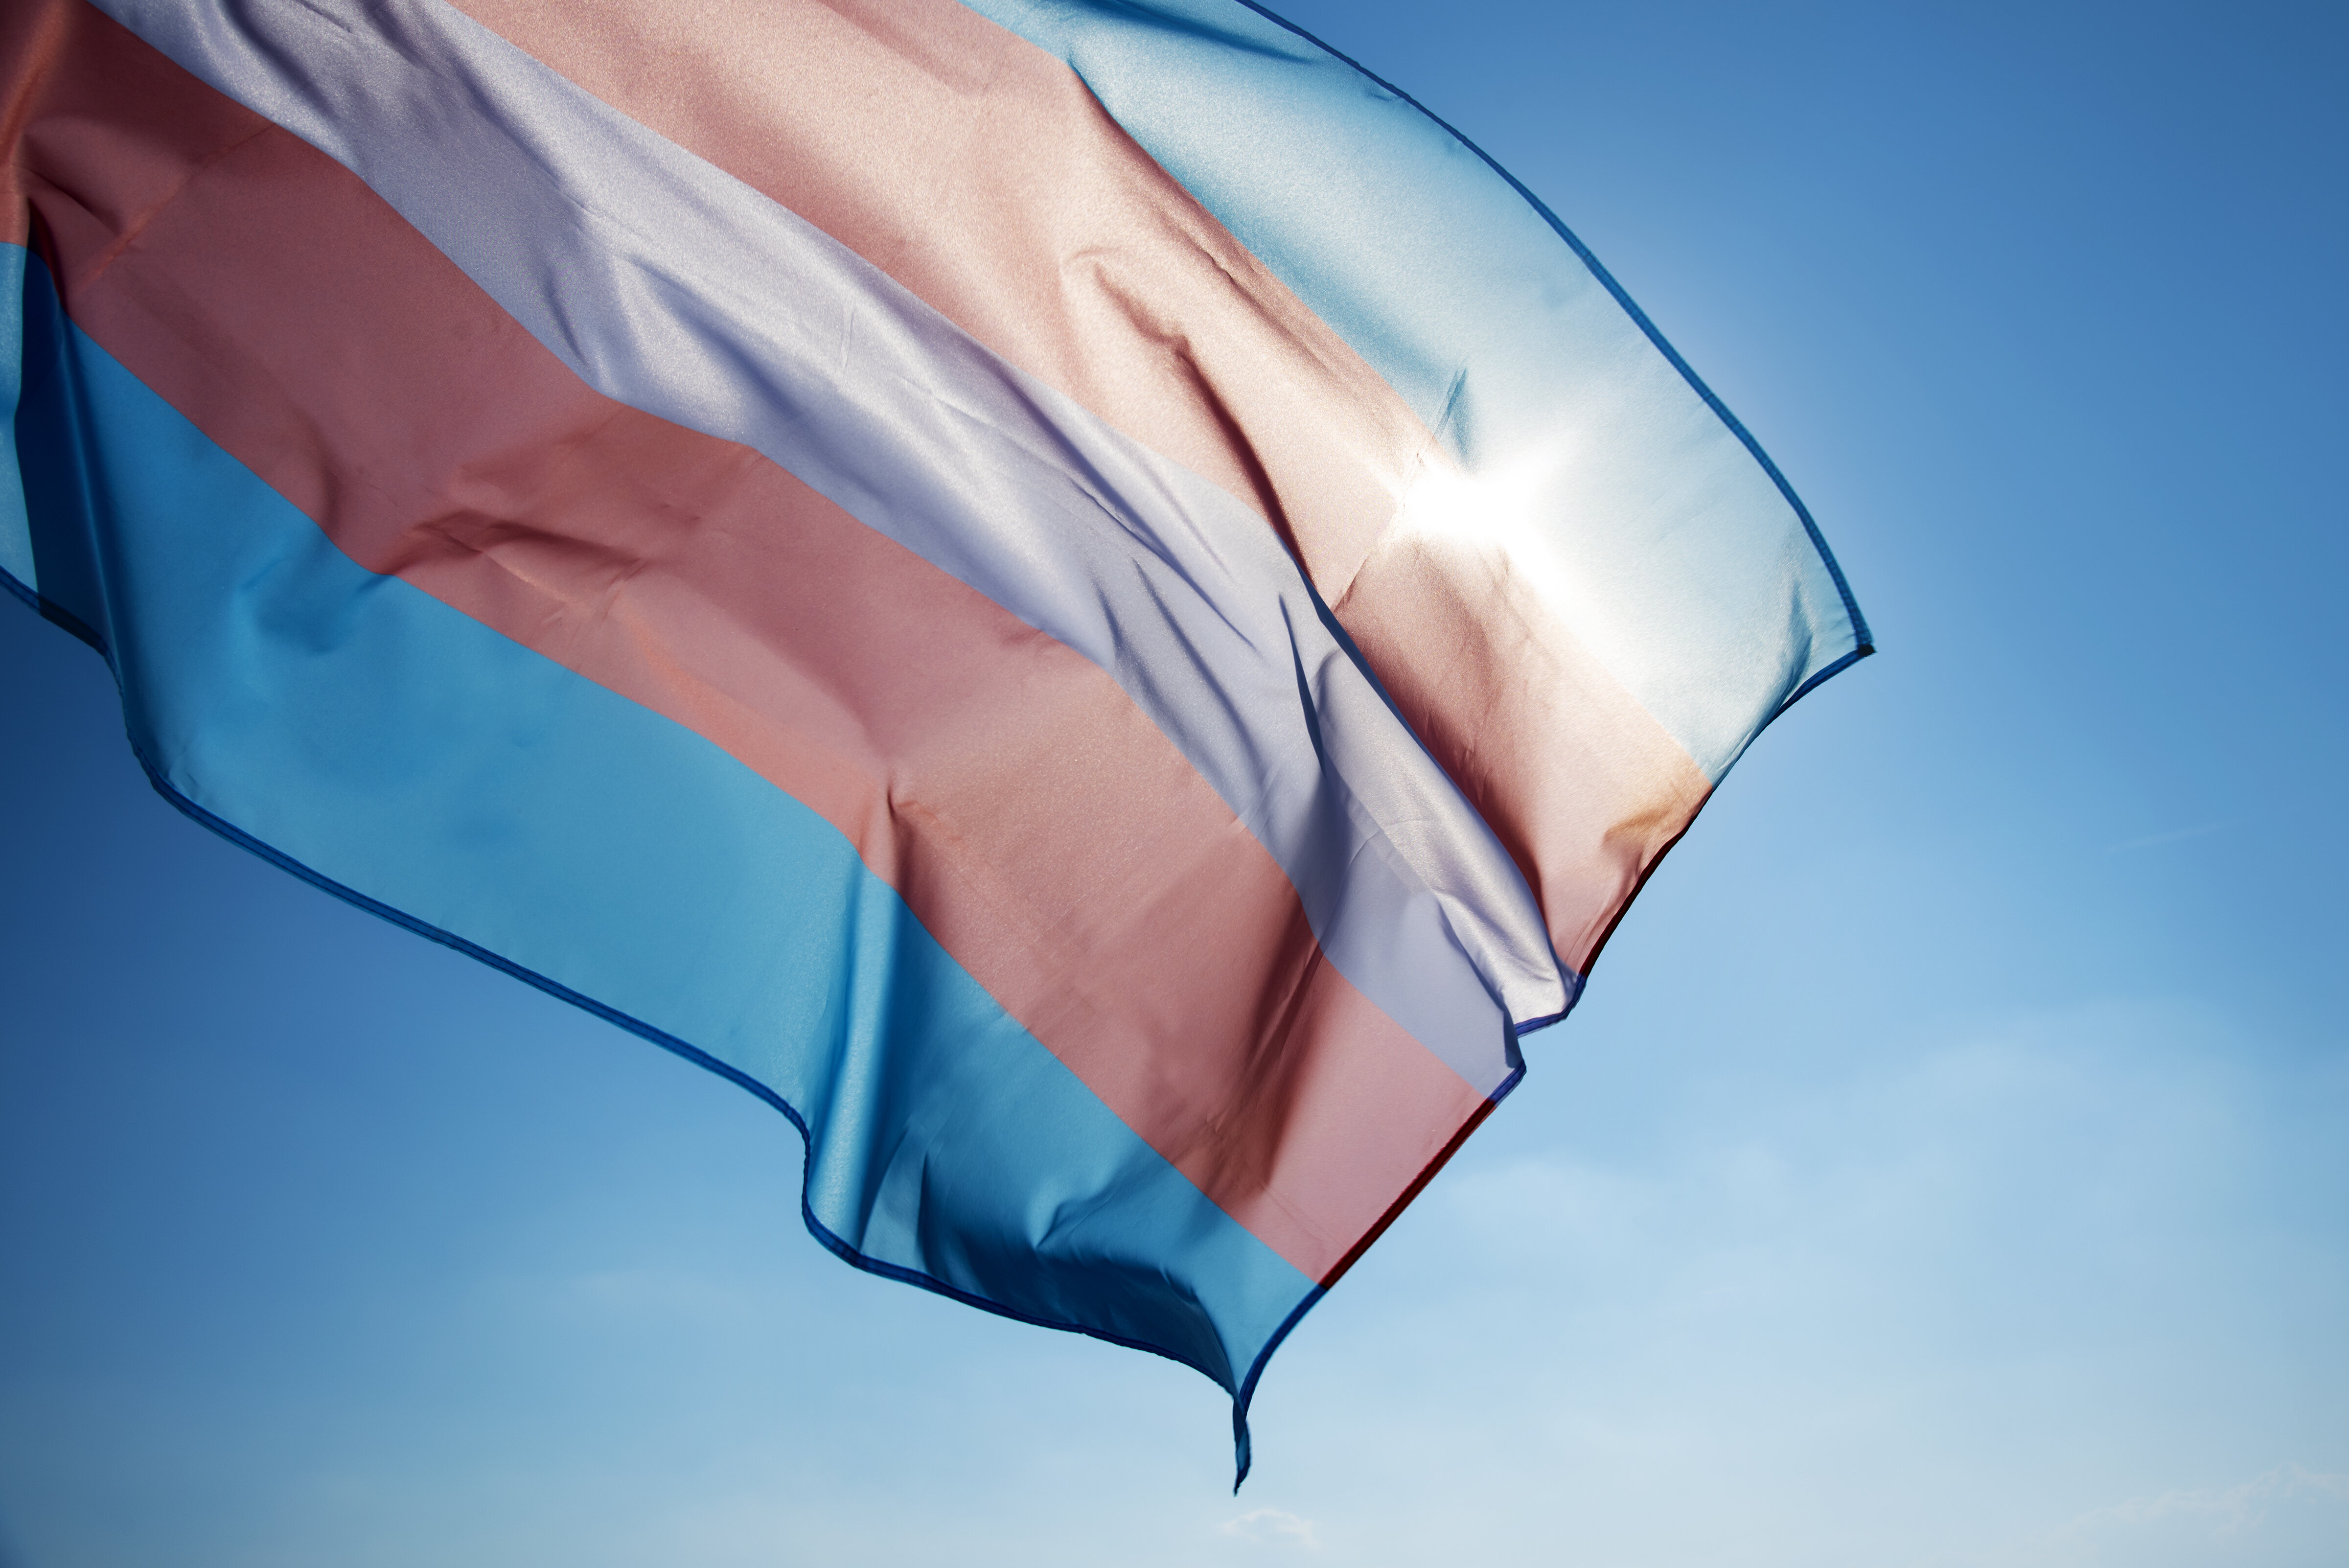 South Dakota Considers Banning Affirming Treatment For Transgender Youth